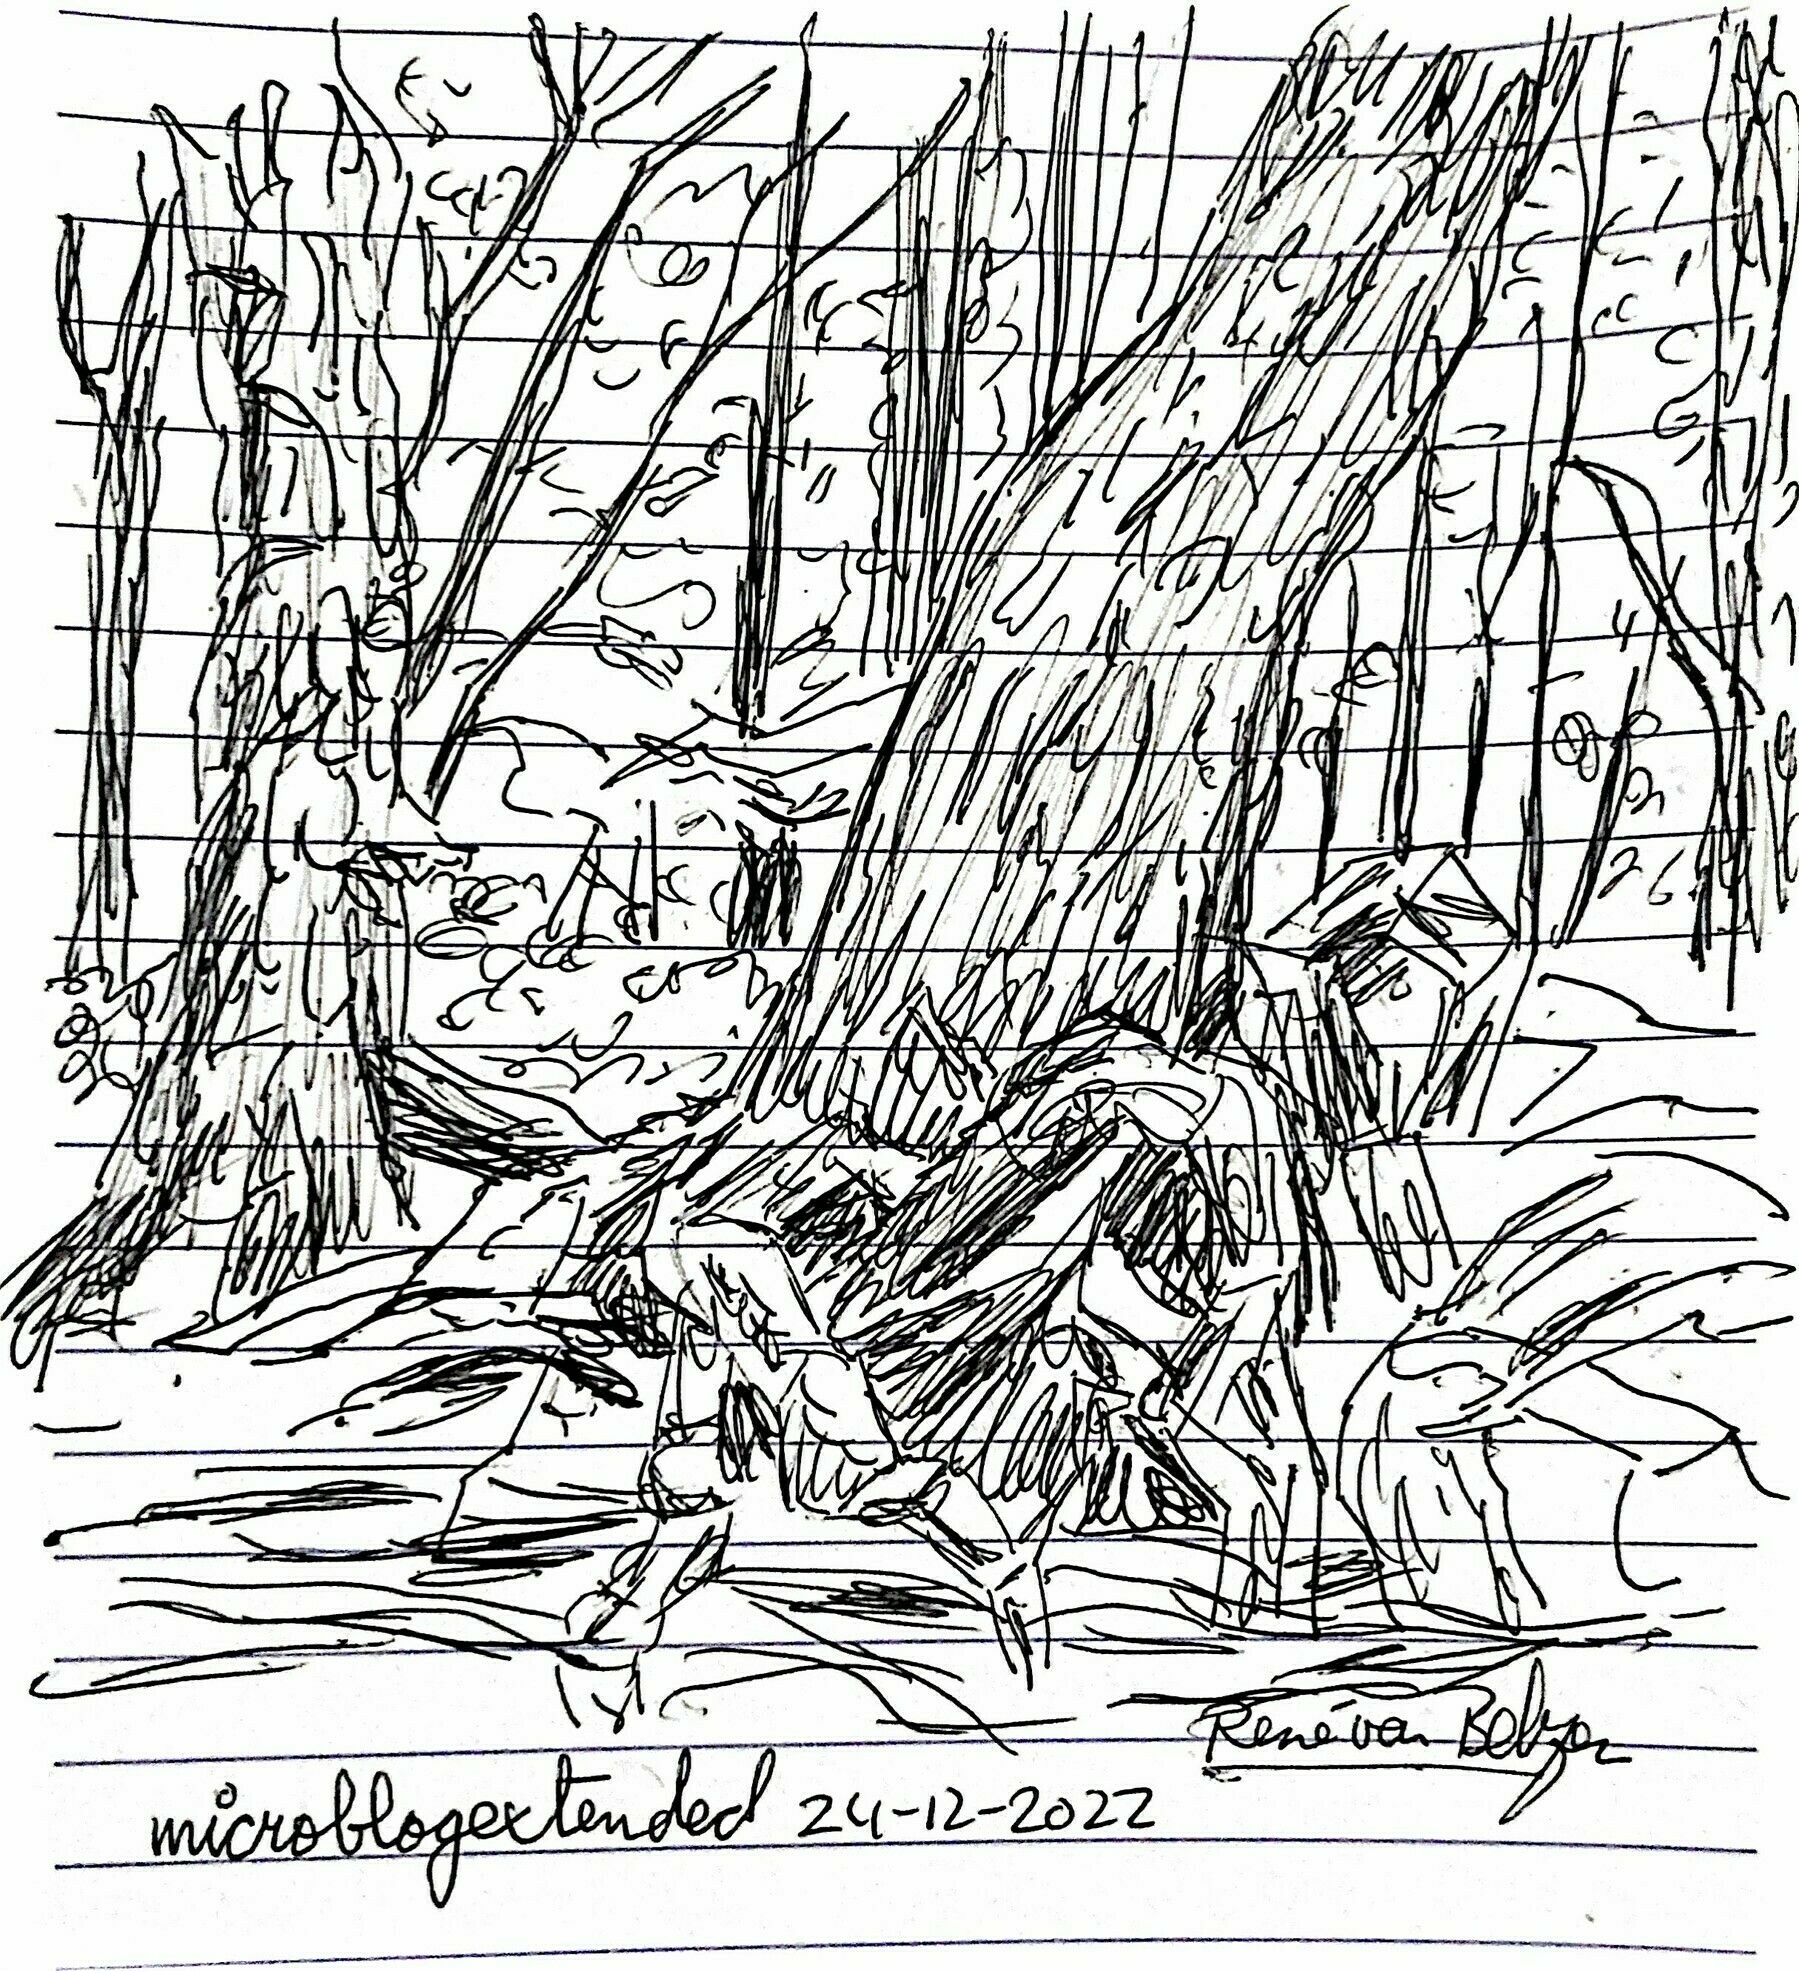 ballpoint pen sketch of a forest